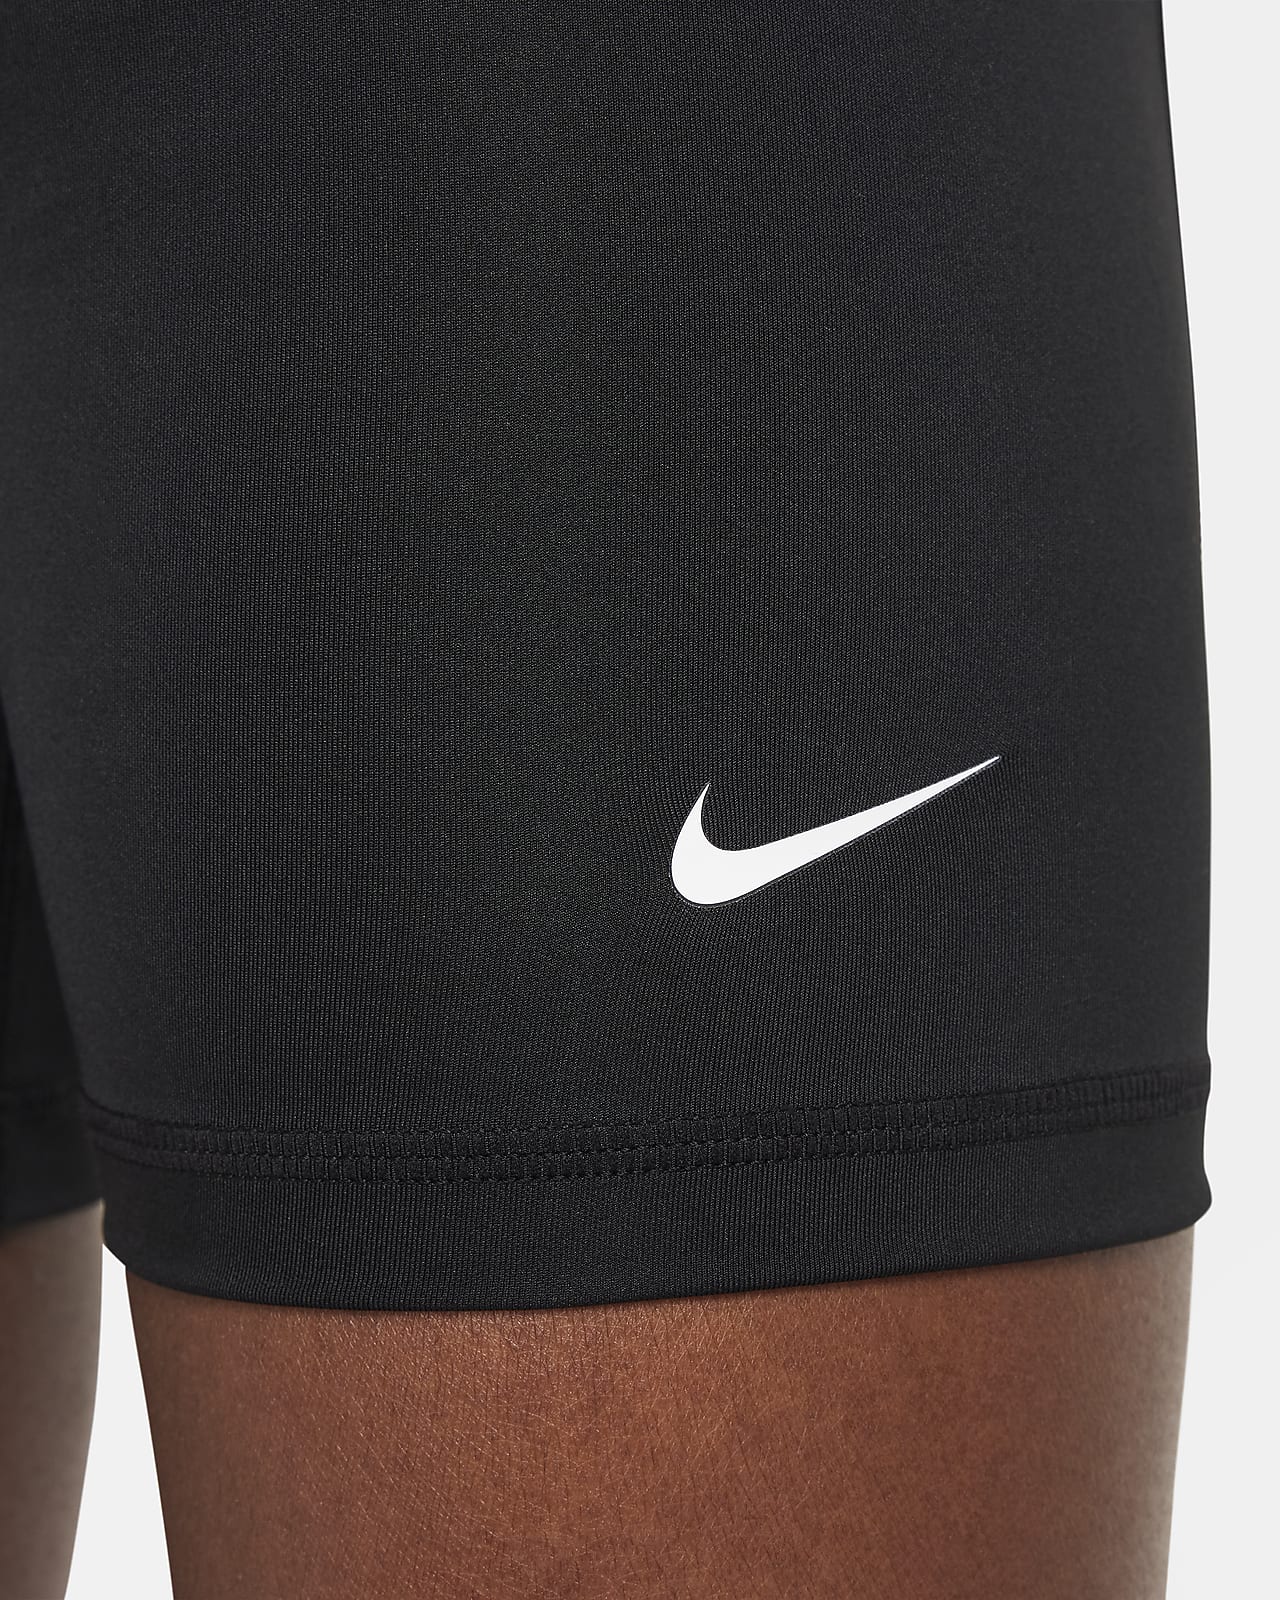 Women's Black Shorts. Nike LU